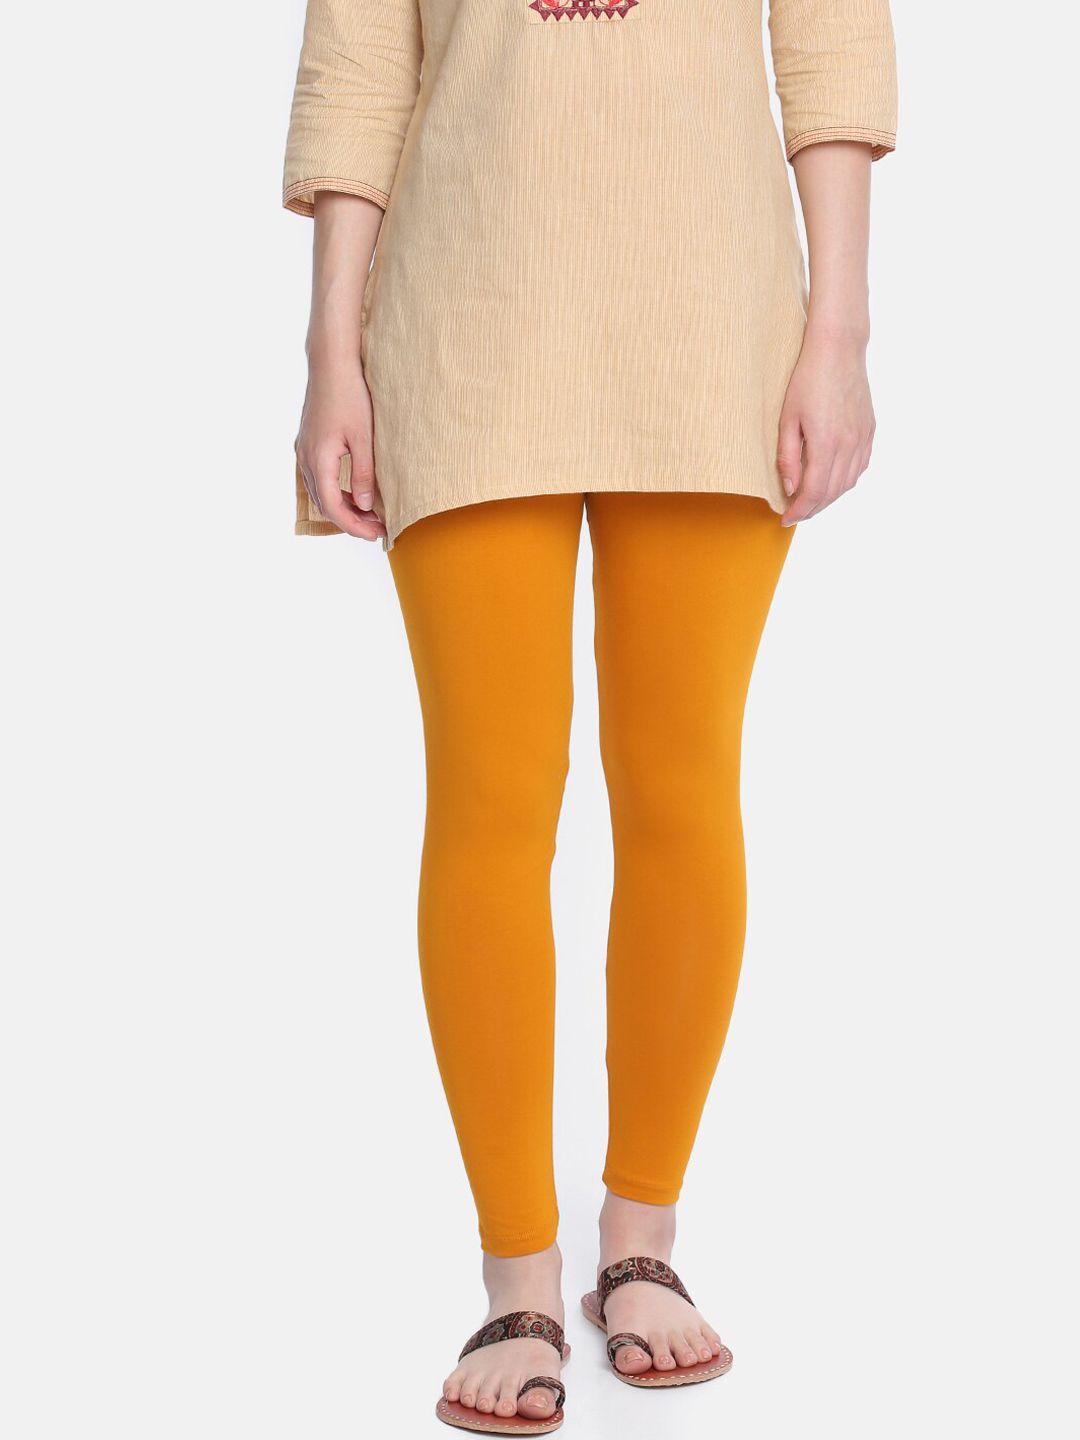 dollar missy women gold coloured solid ankle-length leggings